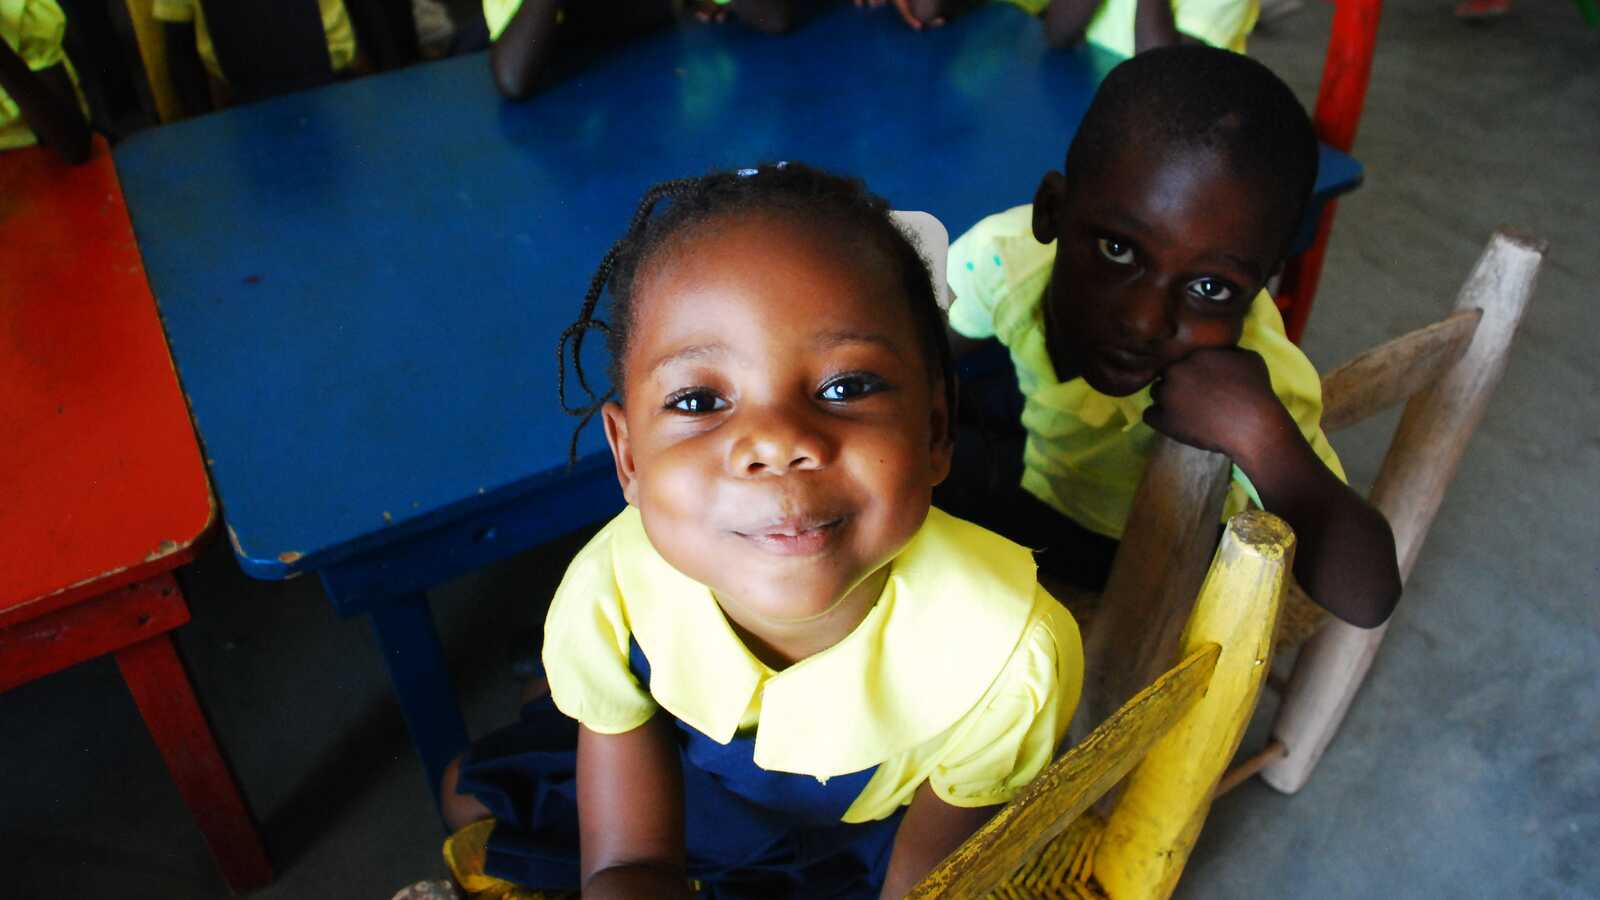 sponsored child in Haiti poses for photo in school